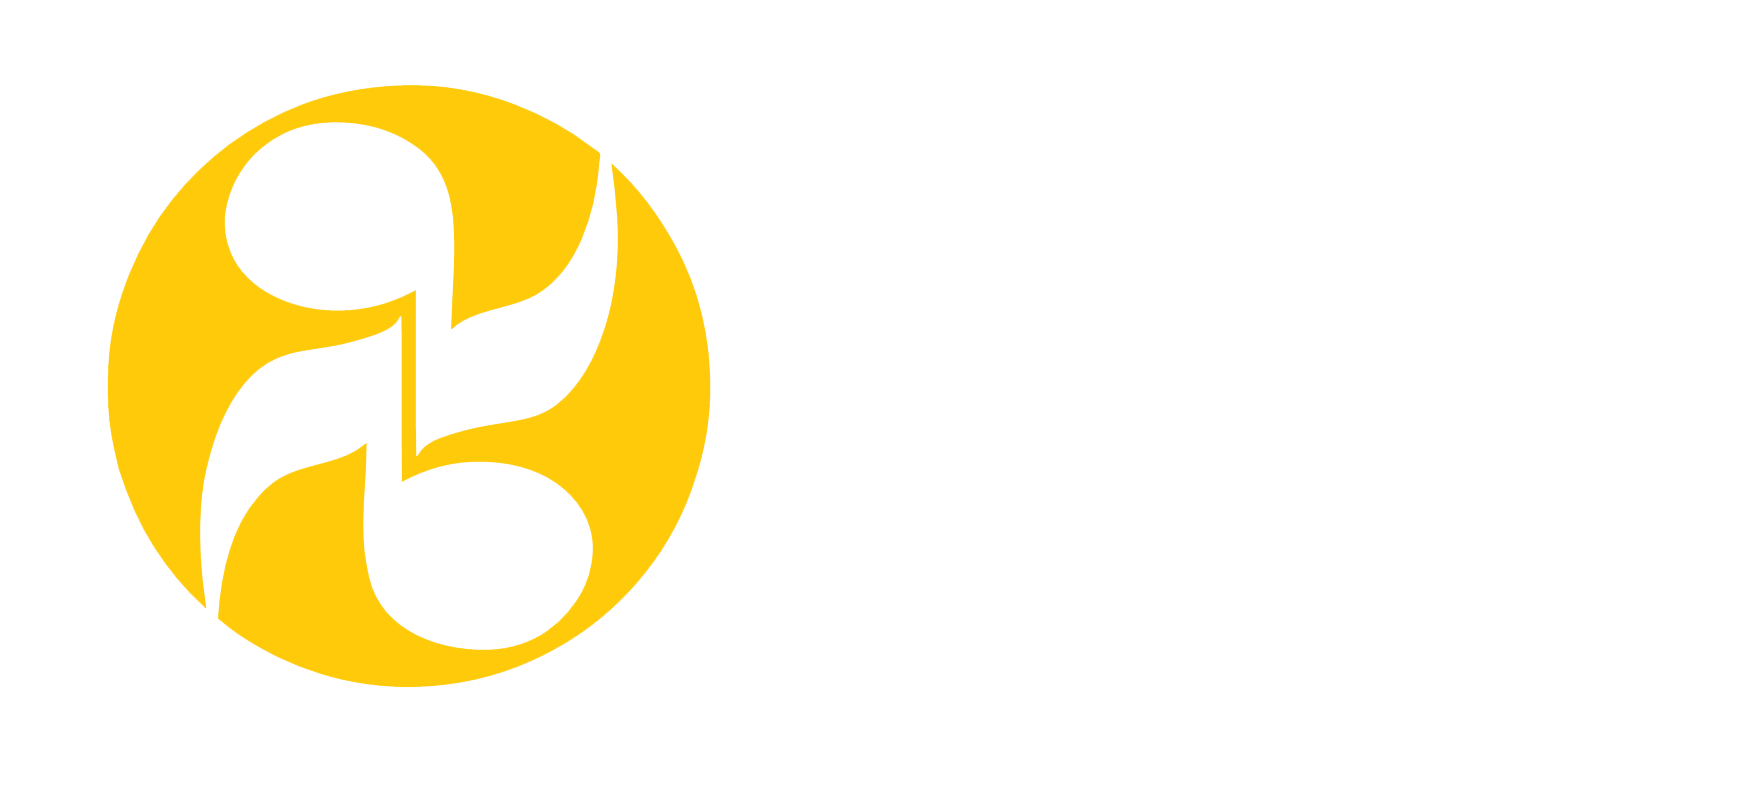 Braddell Heights Symphony Orchestra